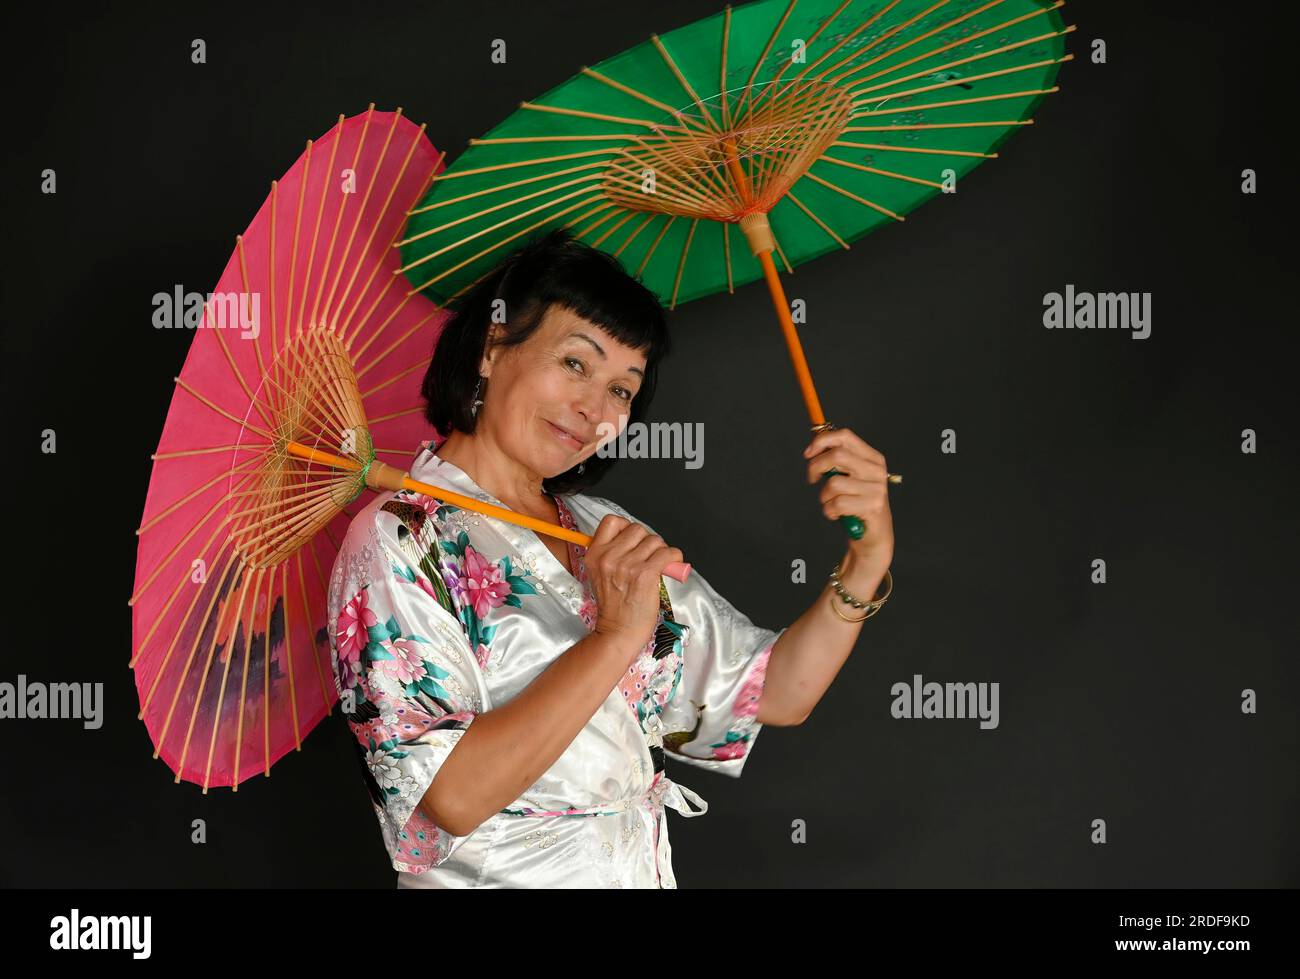 Asiatischer Tanz mit Regenschirmen Stockfoto